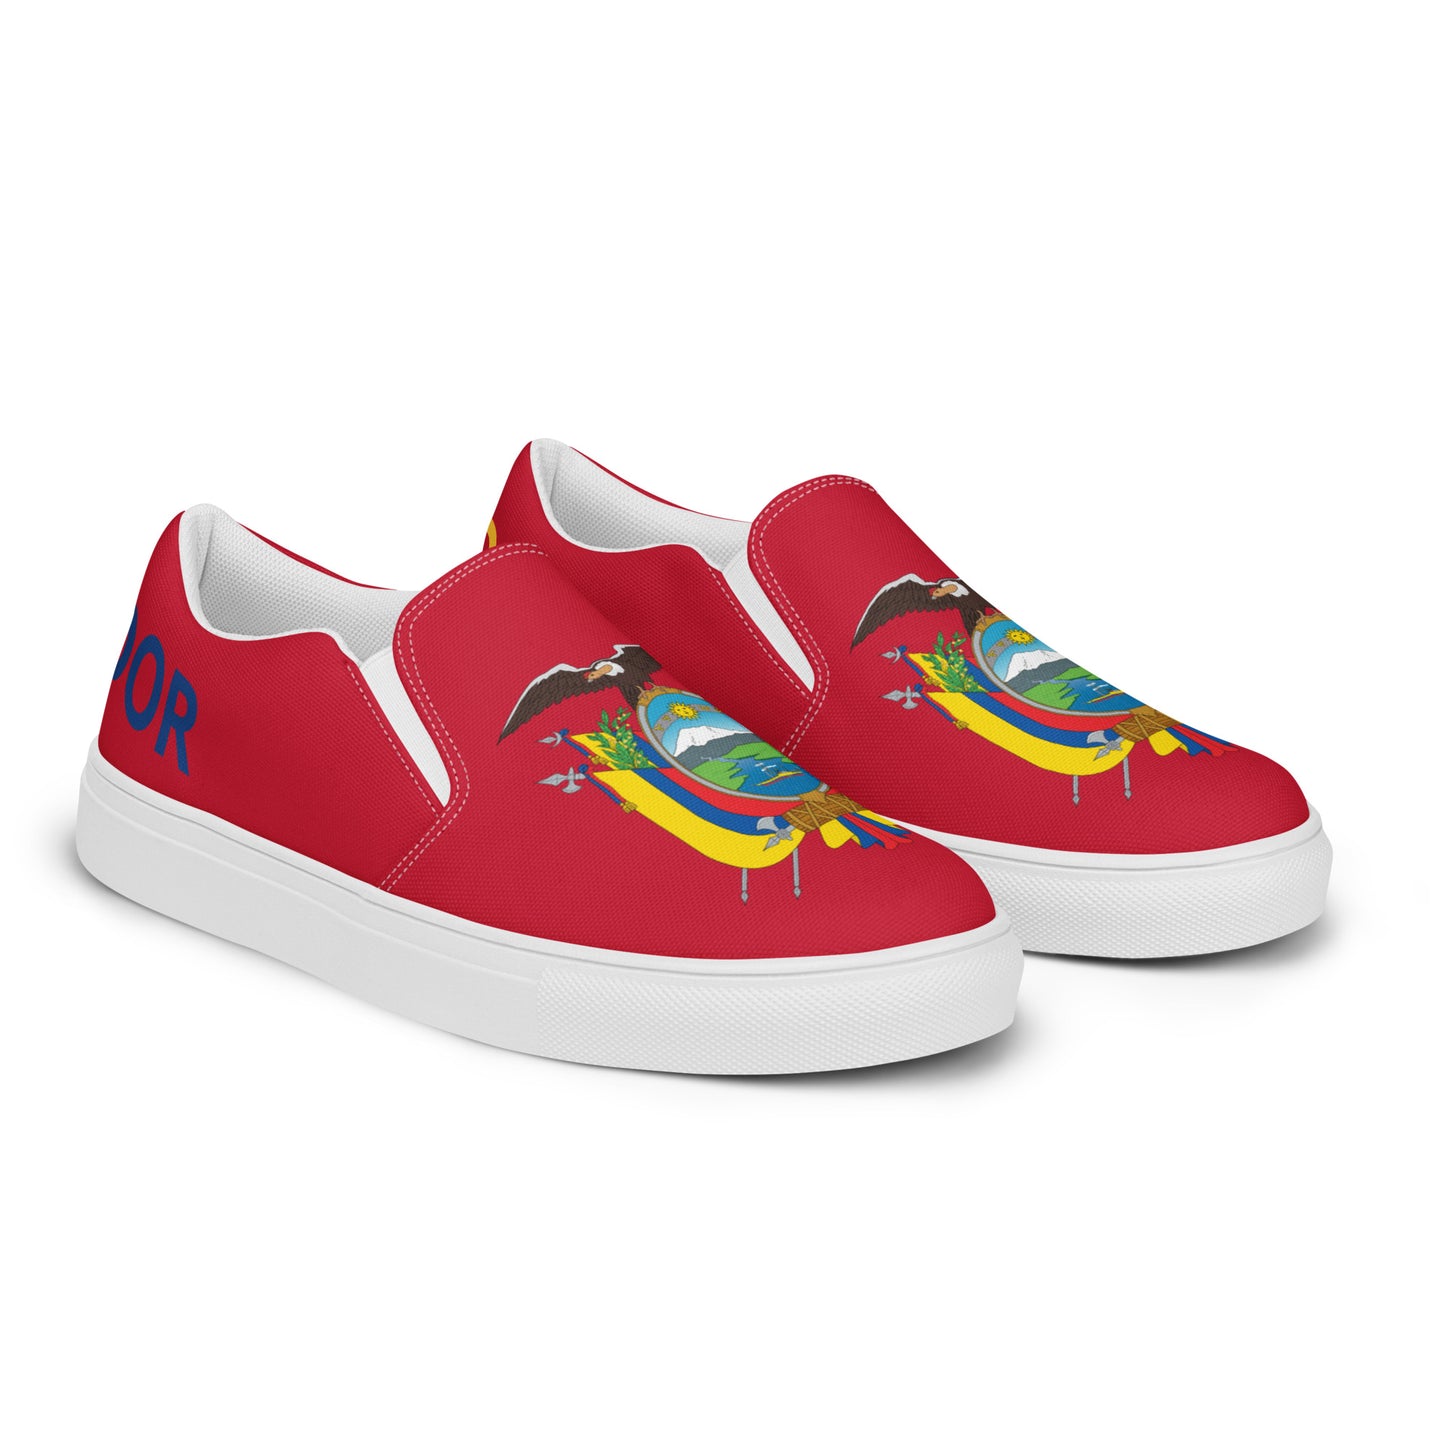 Ecuador - Women - Red - Slip-on shoes